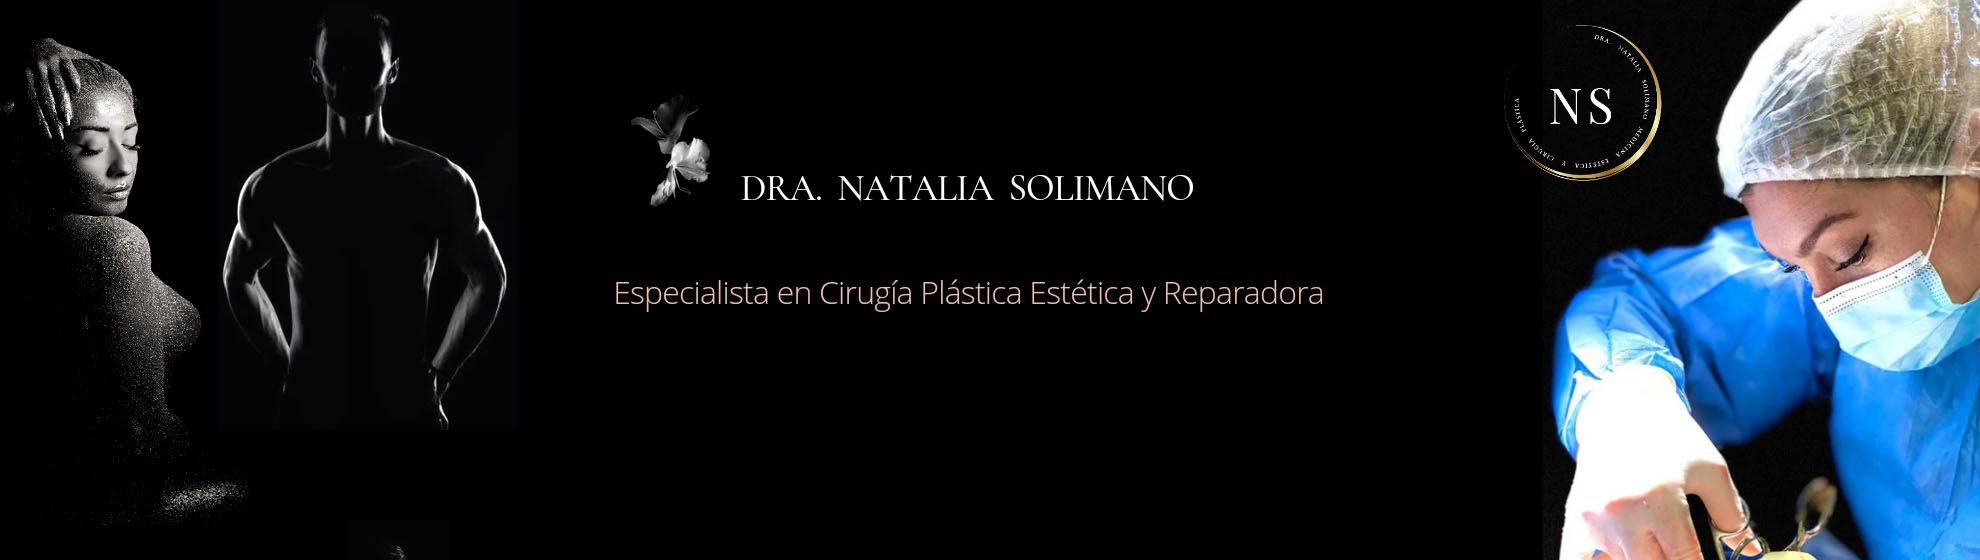 Dra. Natalia Solimano